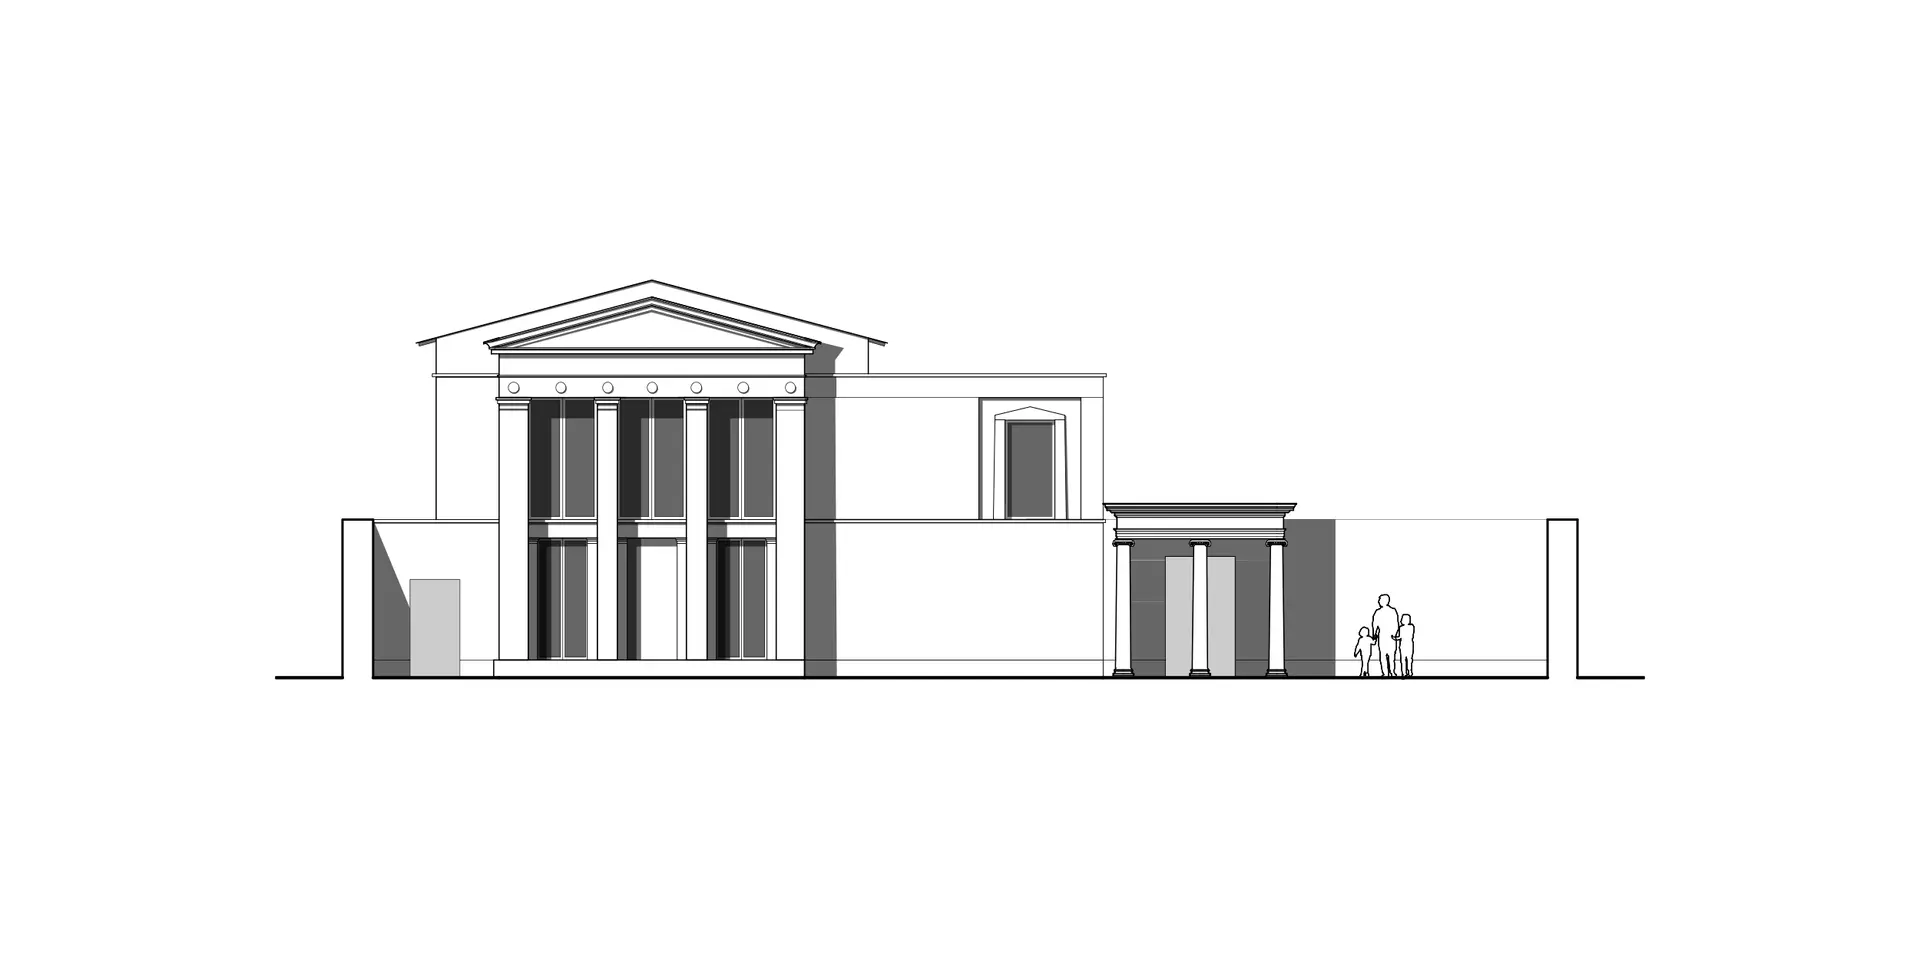 Elevation of larger house villa